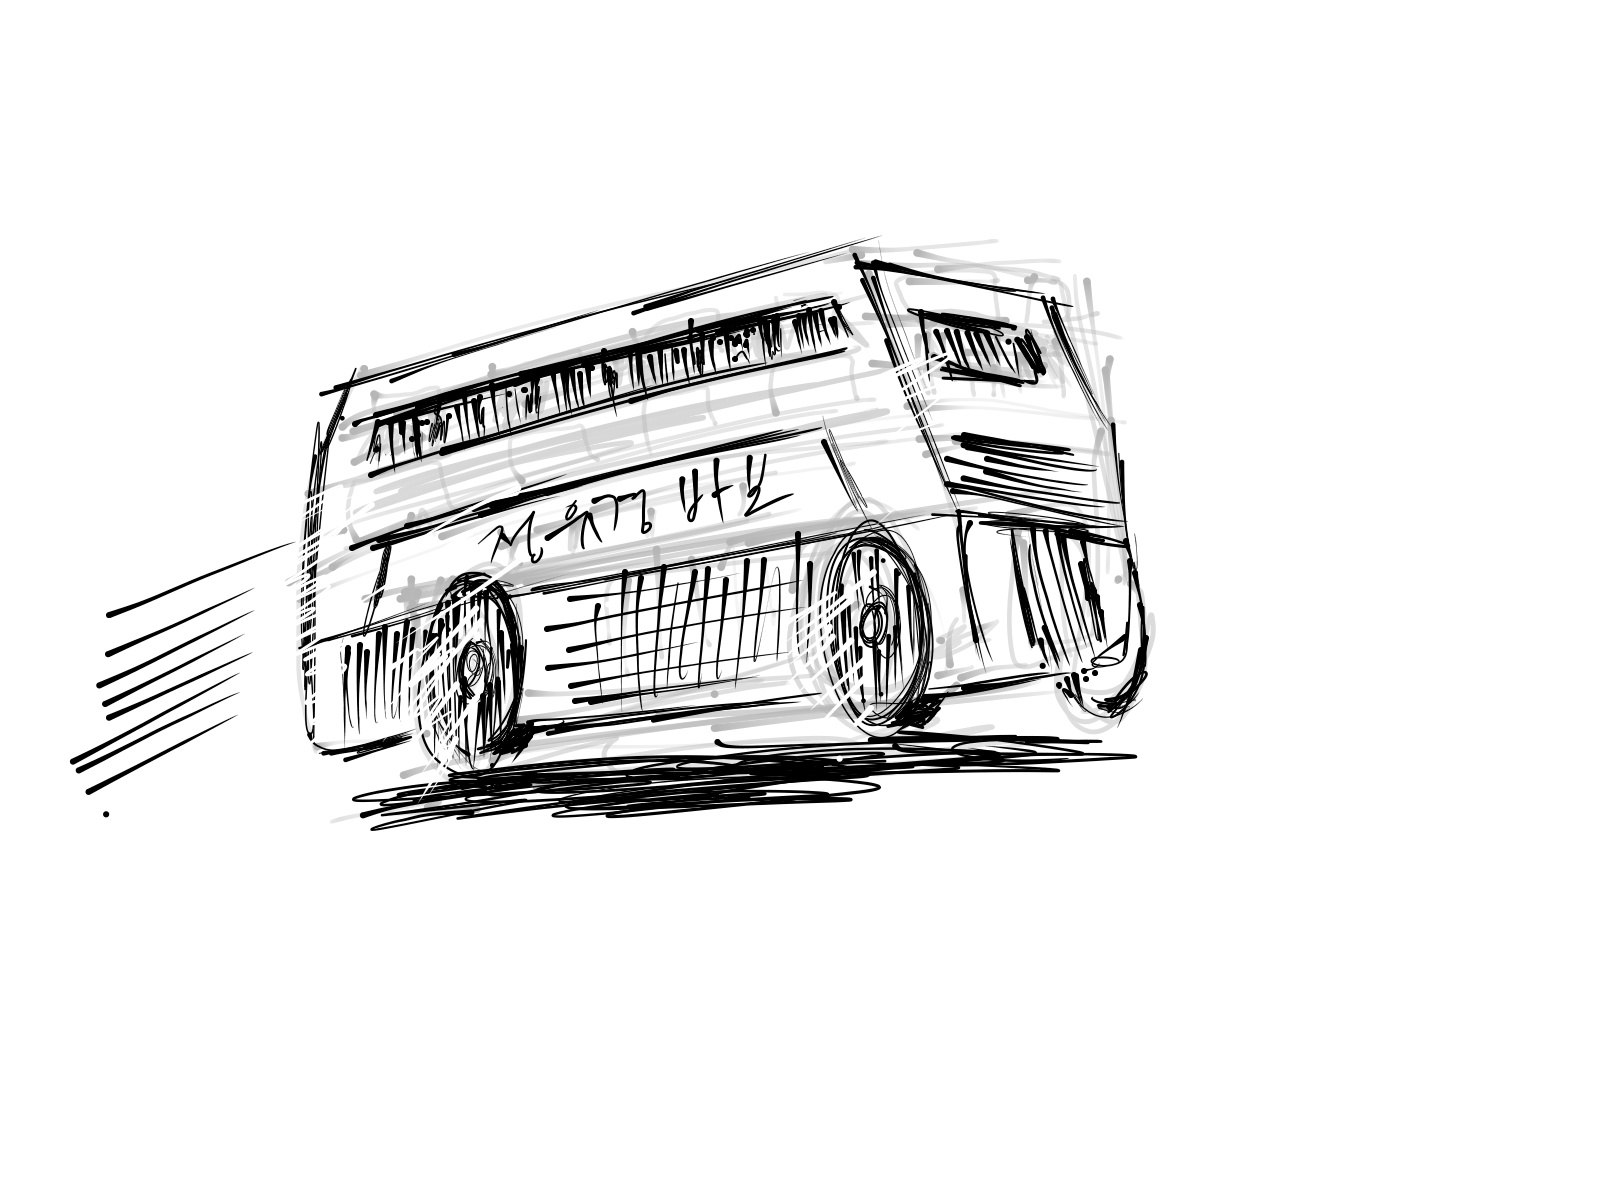 2017_01_06 Bus.jpg